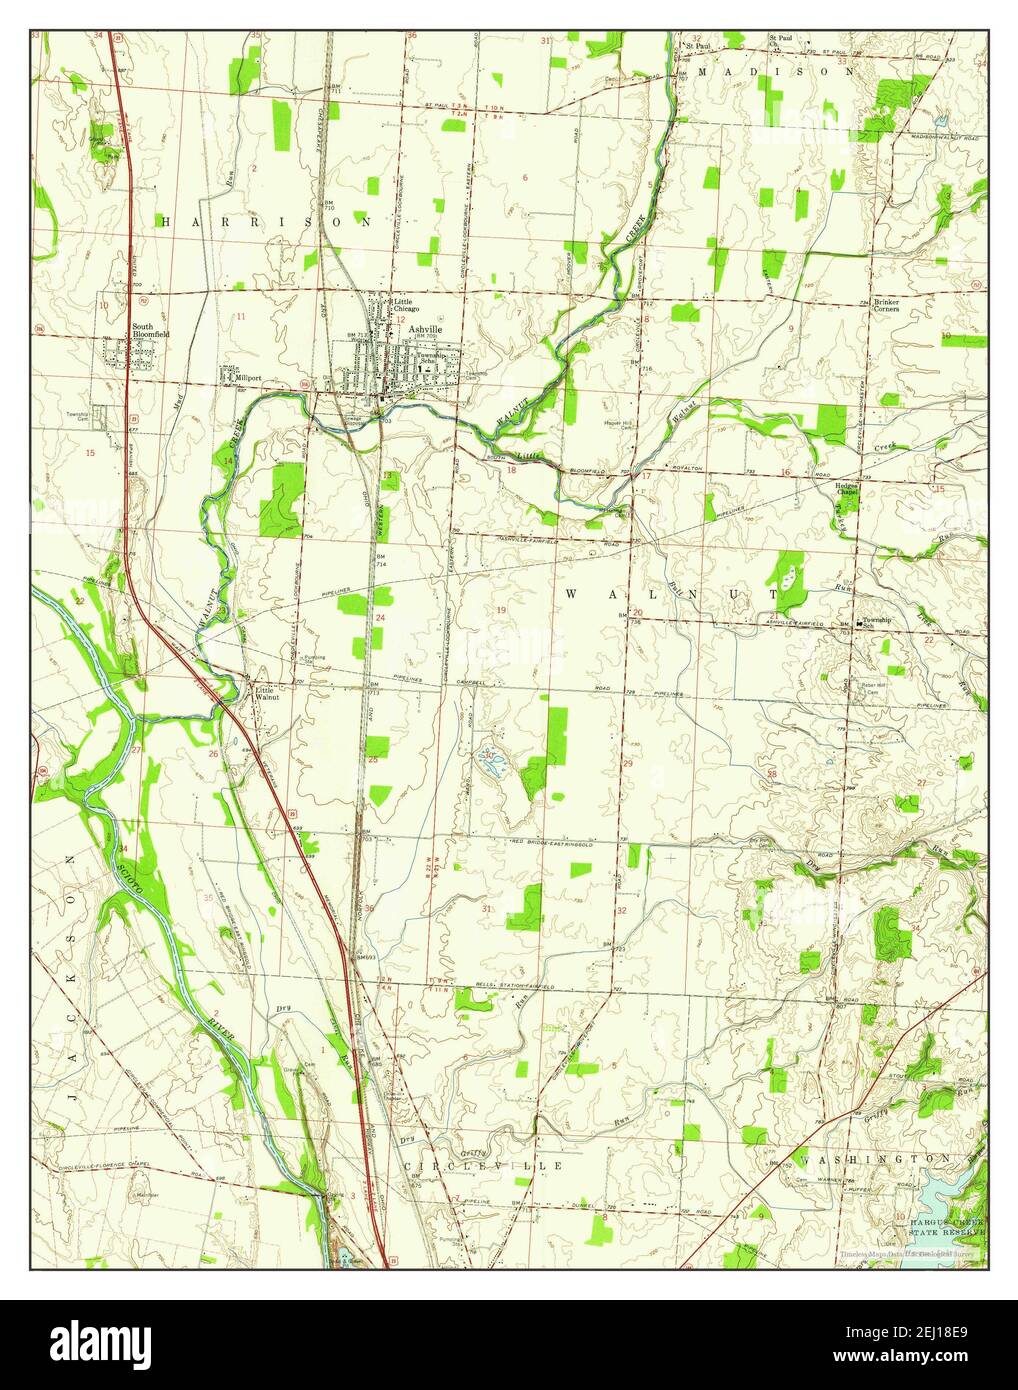 Ashville, Ohio, map 1958, 1:24000, United States of America by Timeless Maps, data U.S. Geological Survey Stock Photo